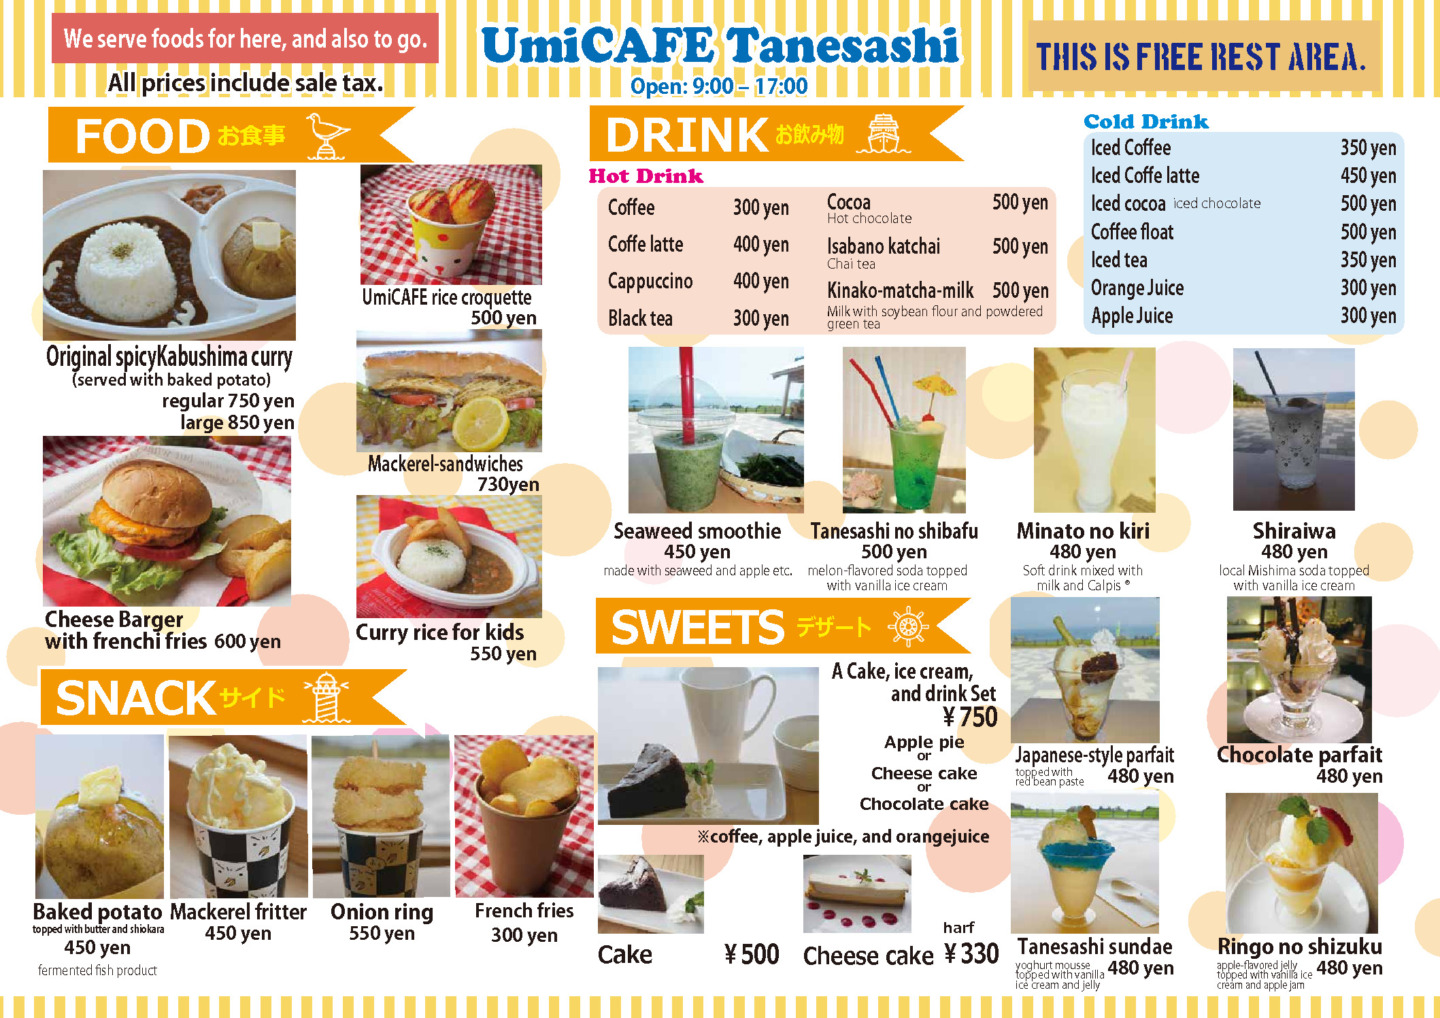 View the Umi café Tanesashi Menu in PDF